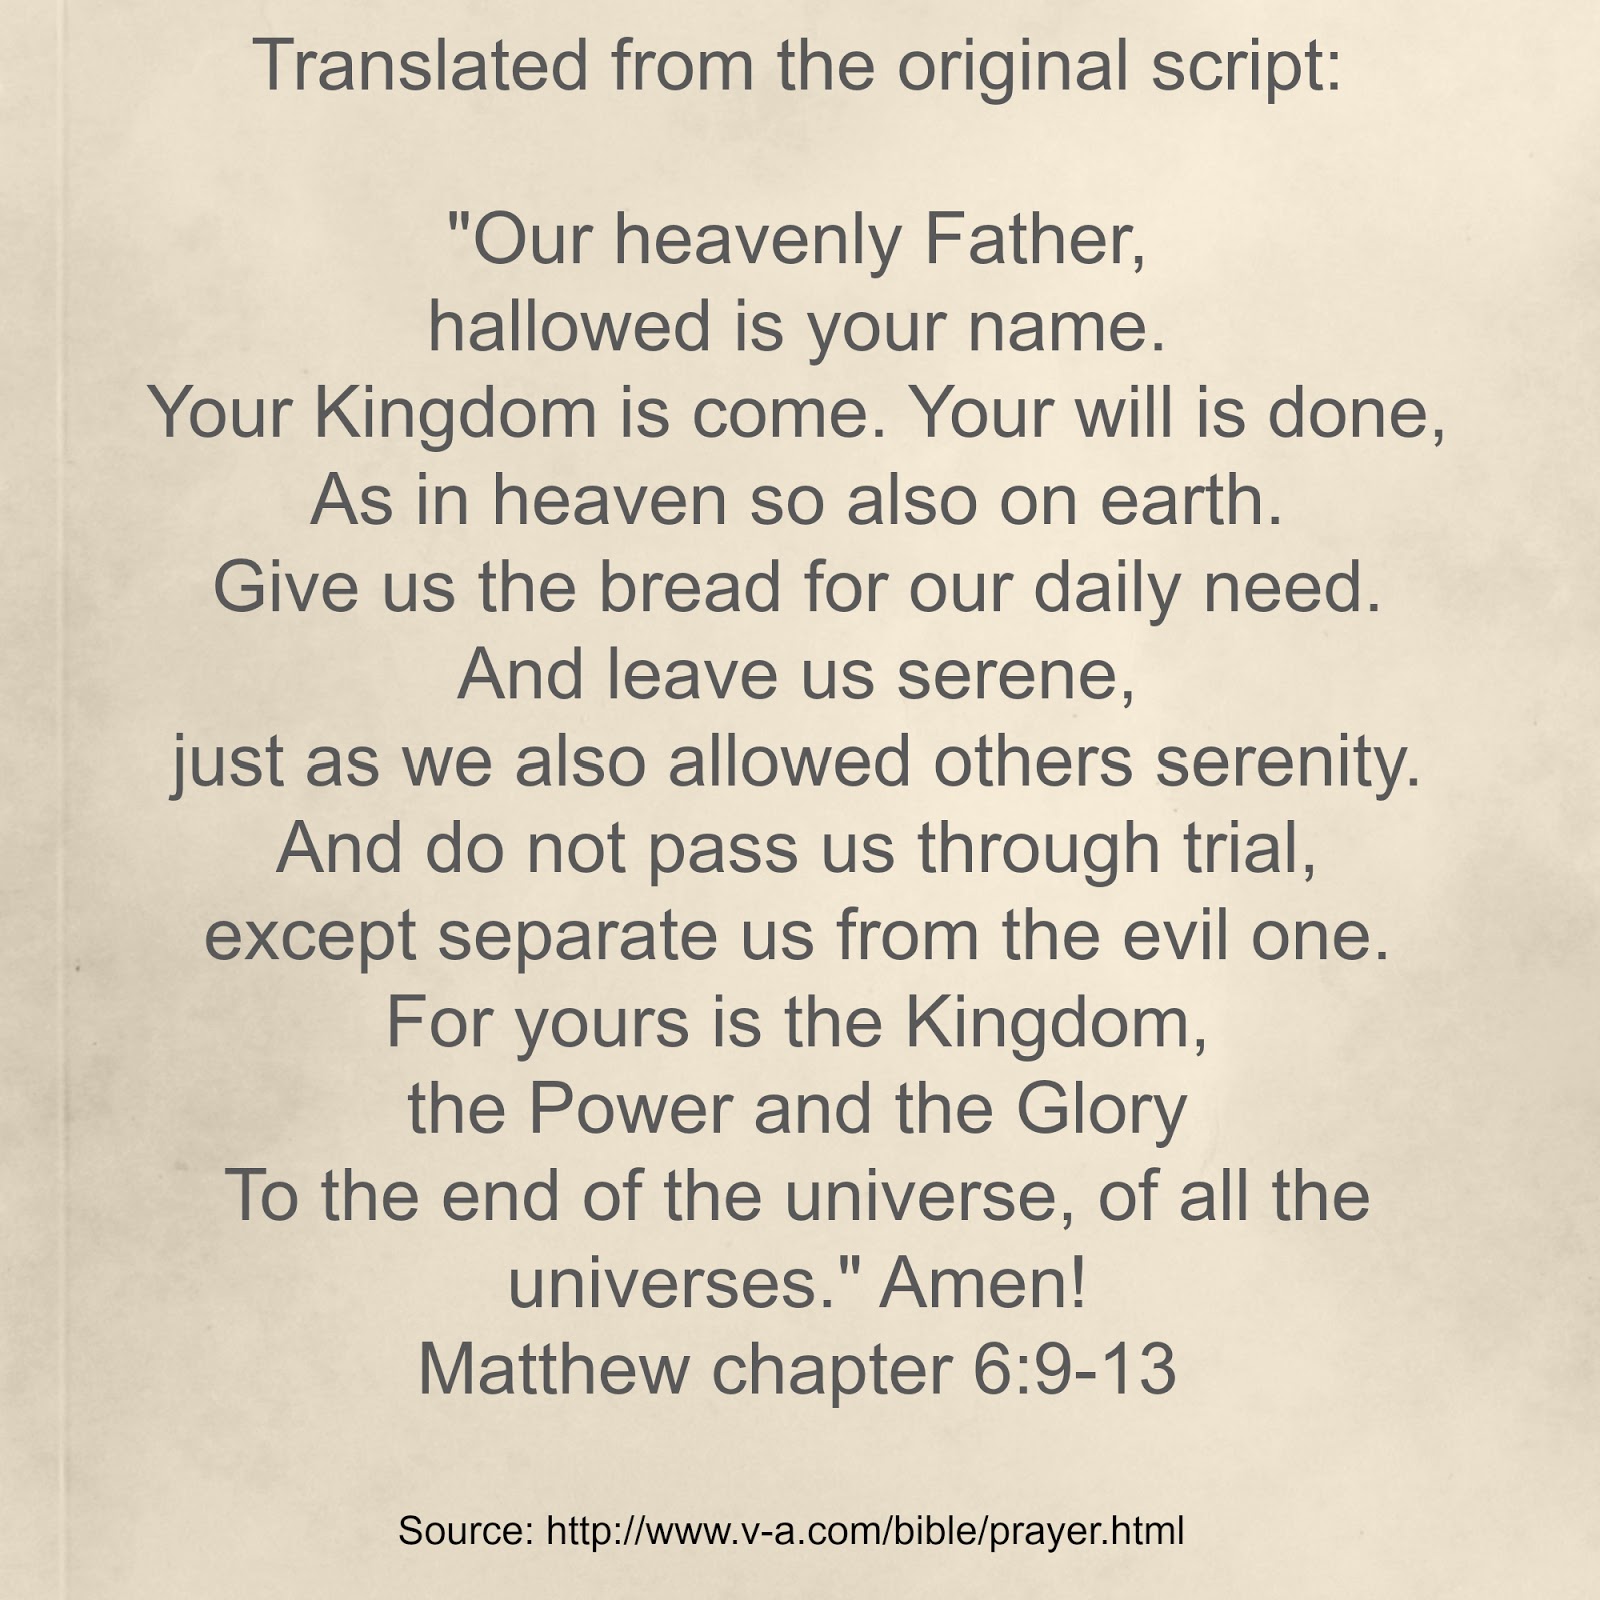 lord-s-prayer-translated-from-its-original-script-queentulip